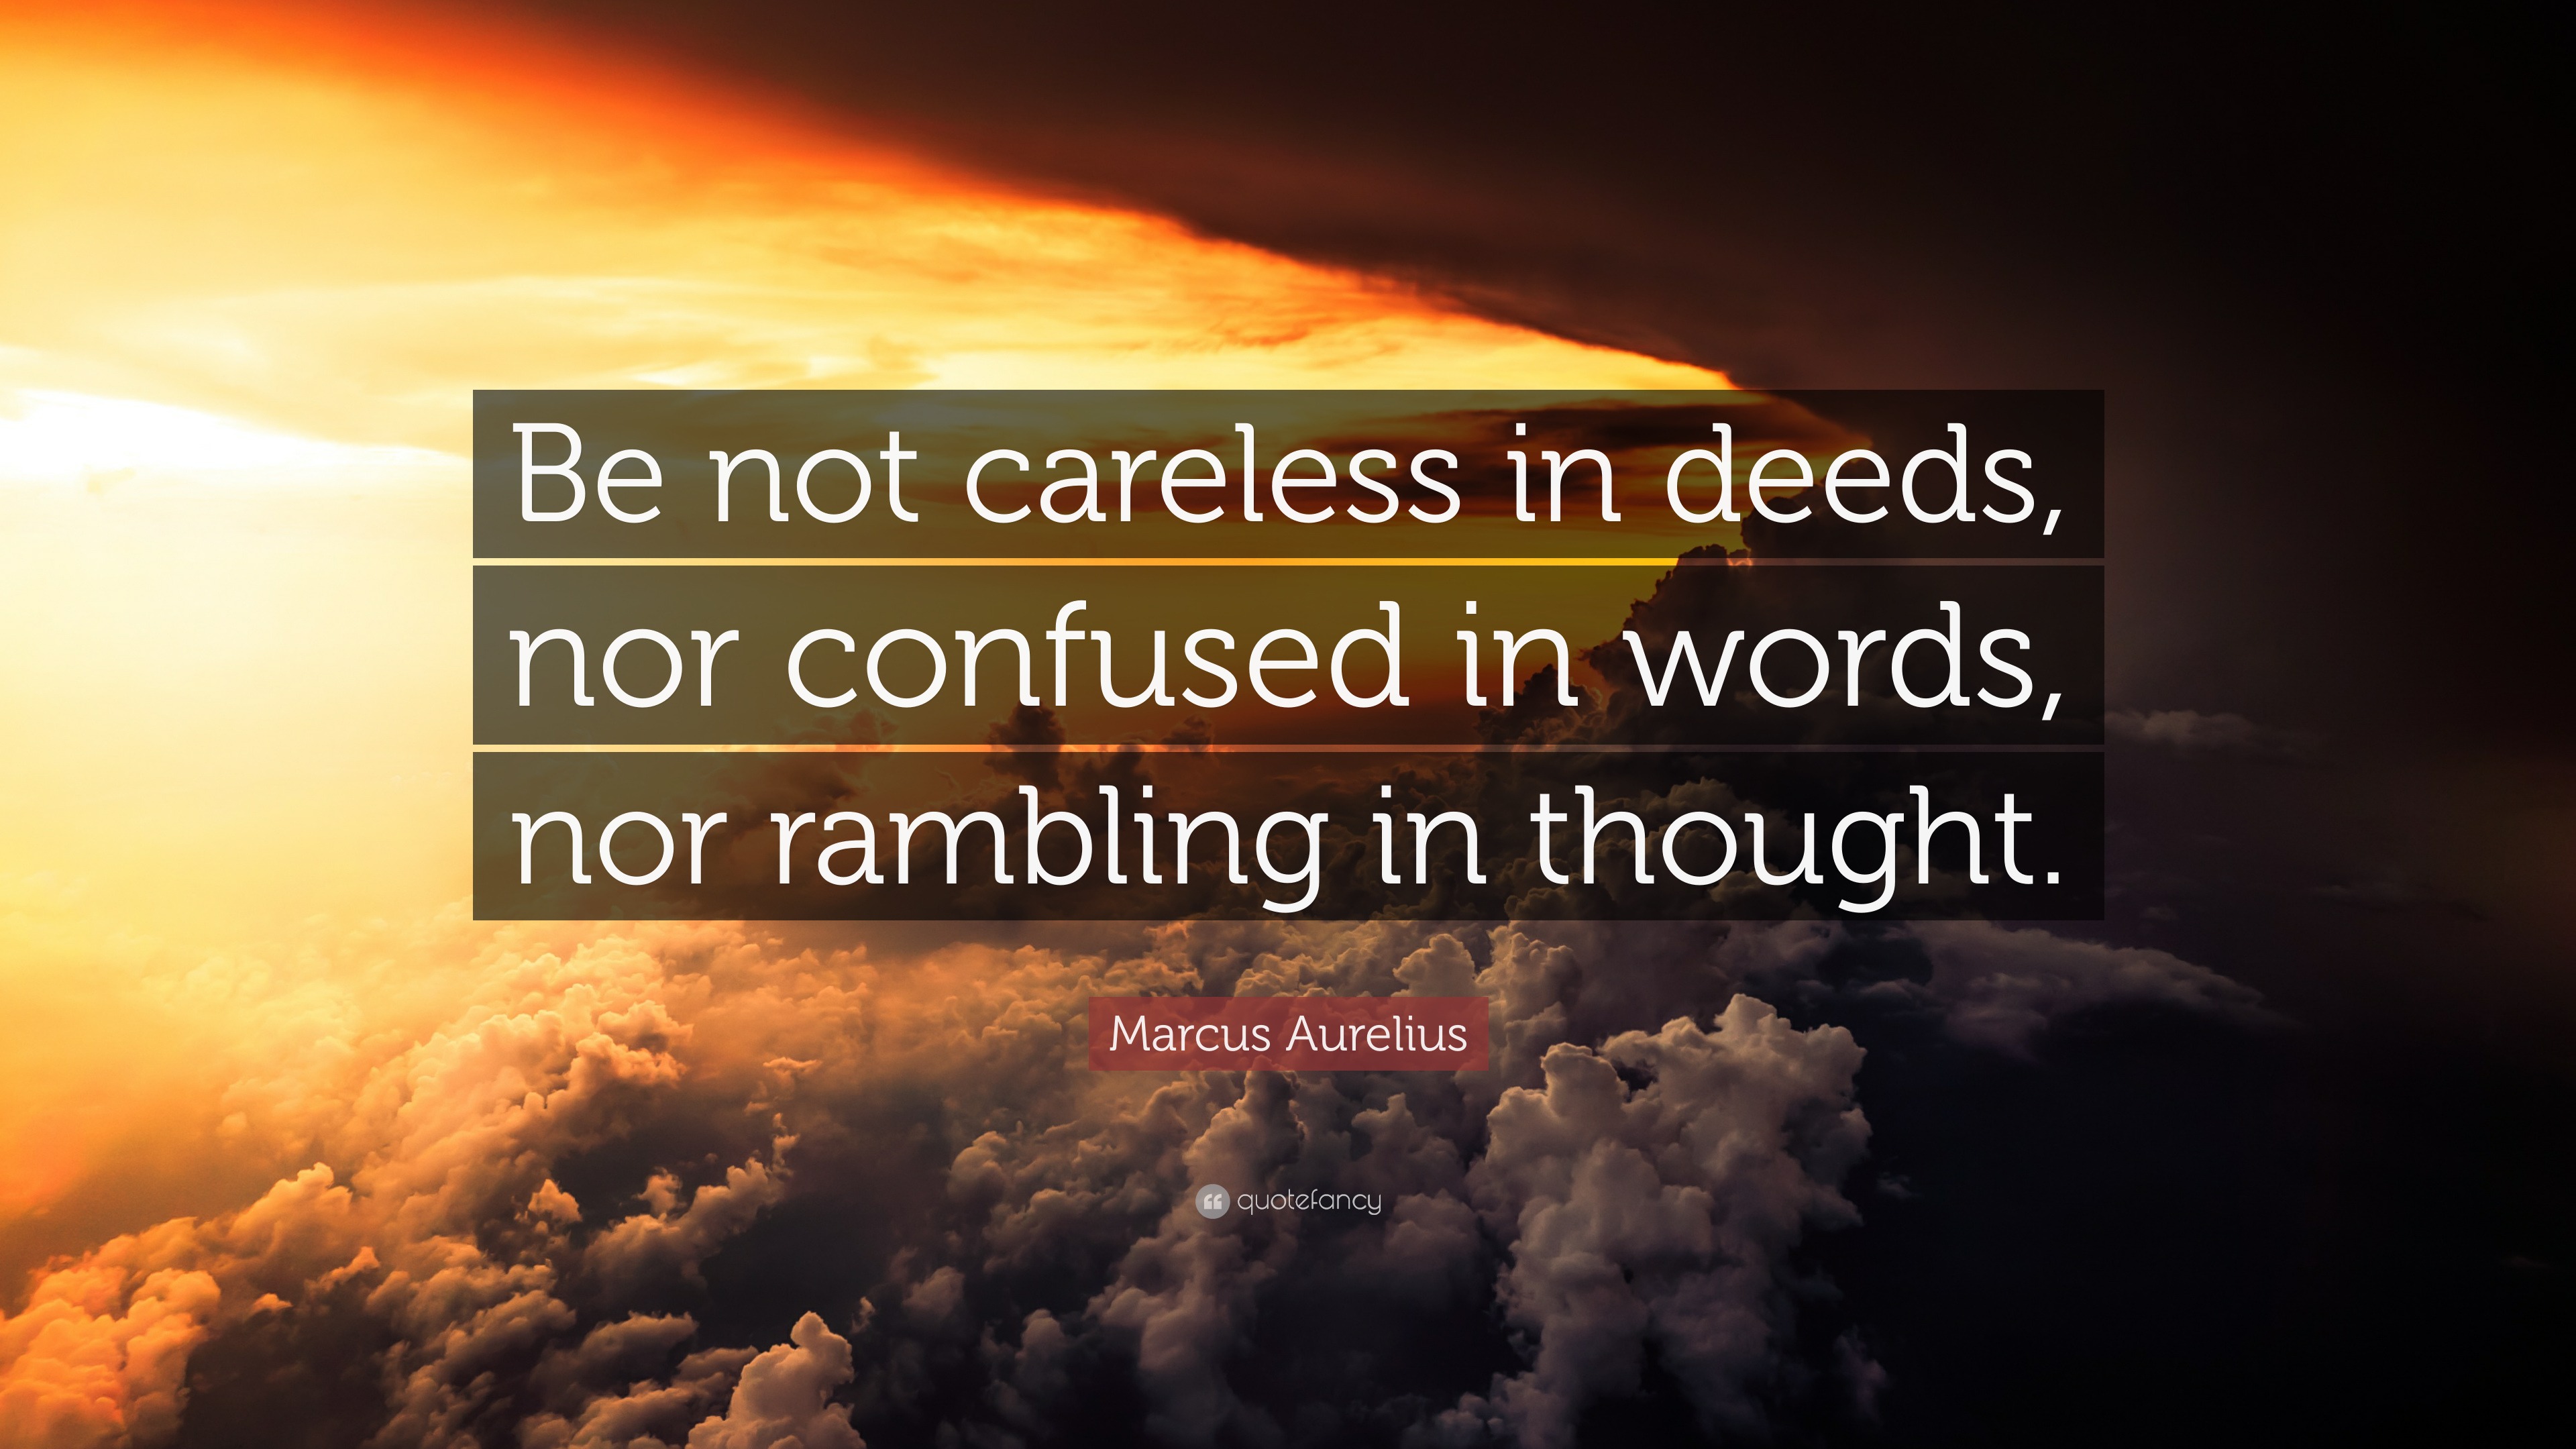 Marcus Aurelius Quote: “Be not careless in deeds, nor confused in words ...